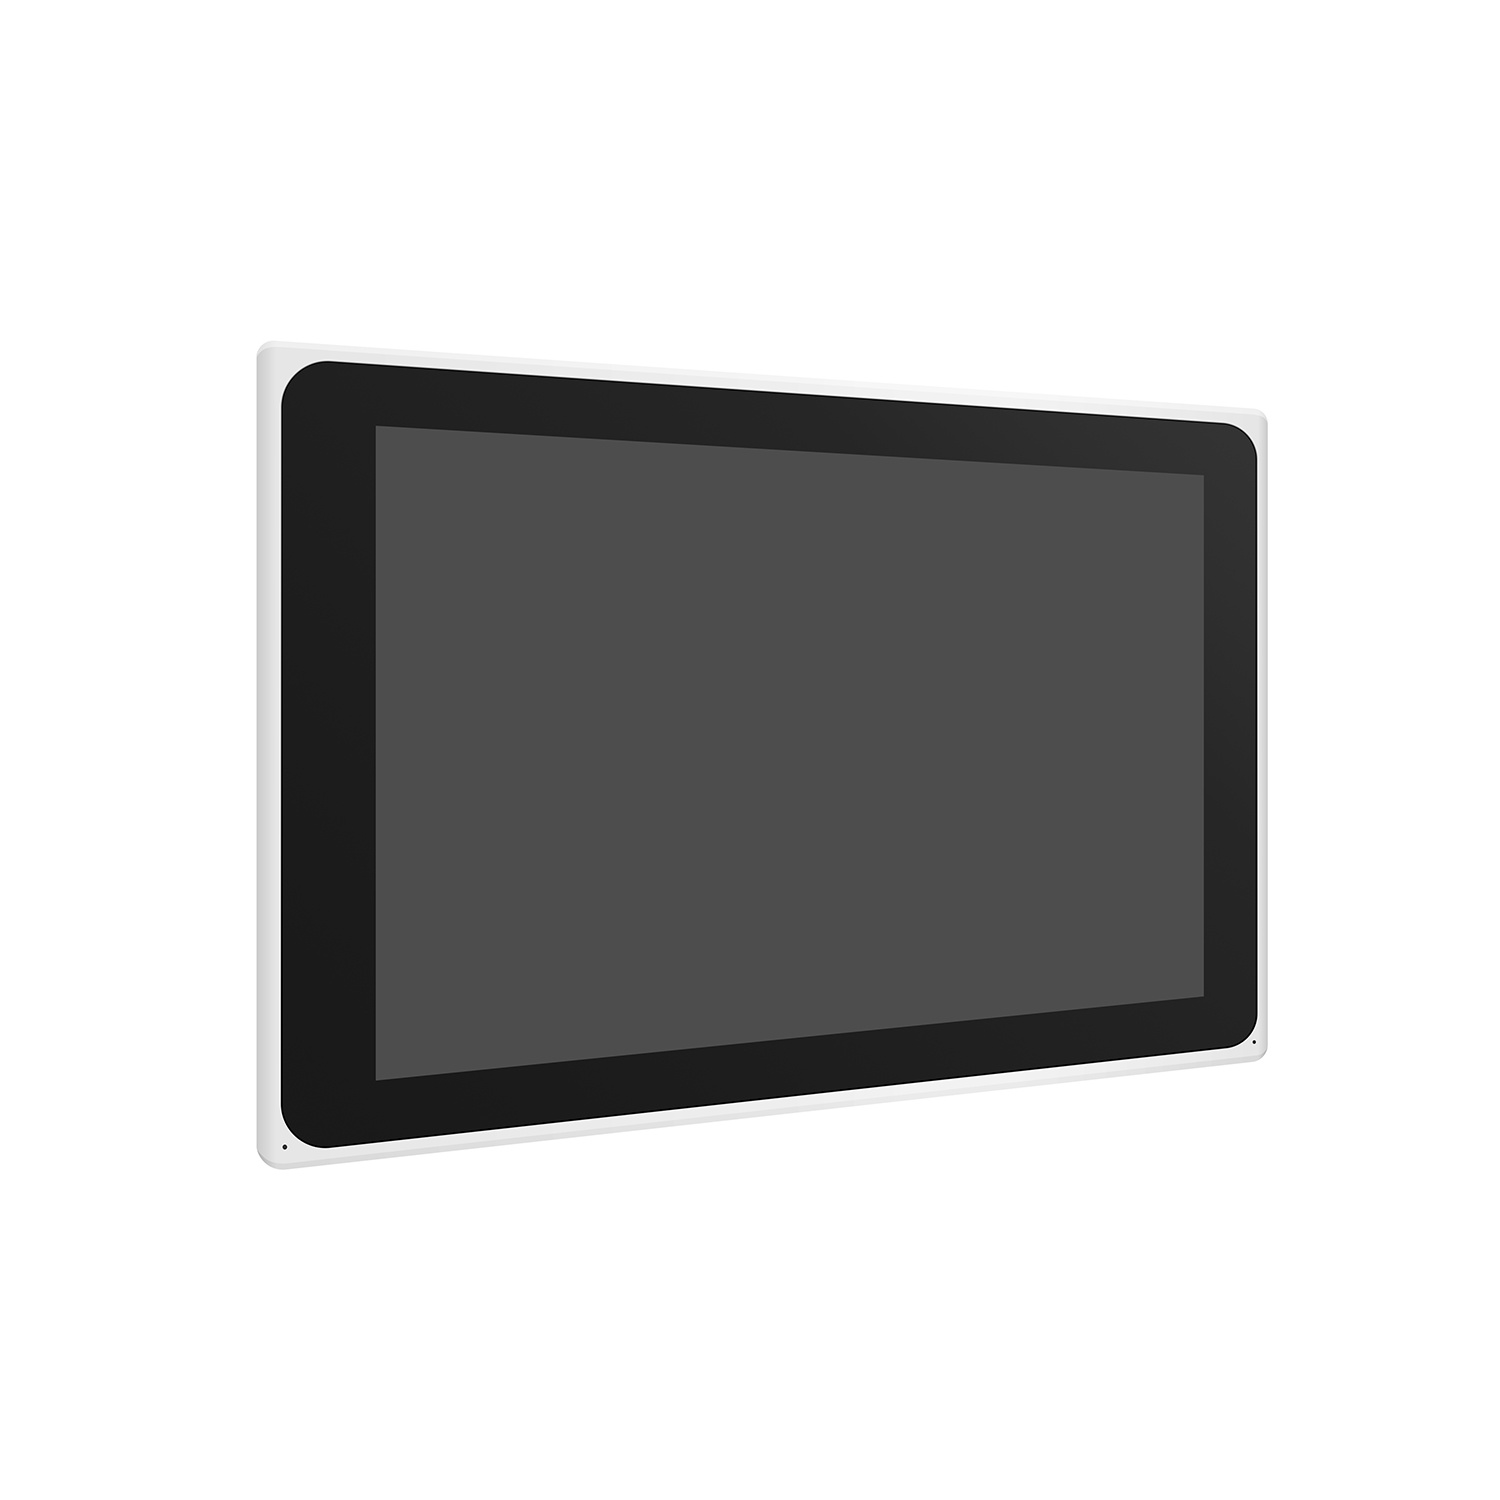 WiFi NVR Kit 10" LCD Screen Wireless Kit Video Recorder Tuya 8CH 3MP 2.4G H. 265